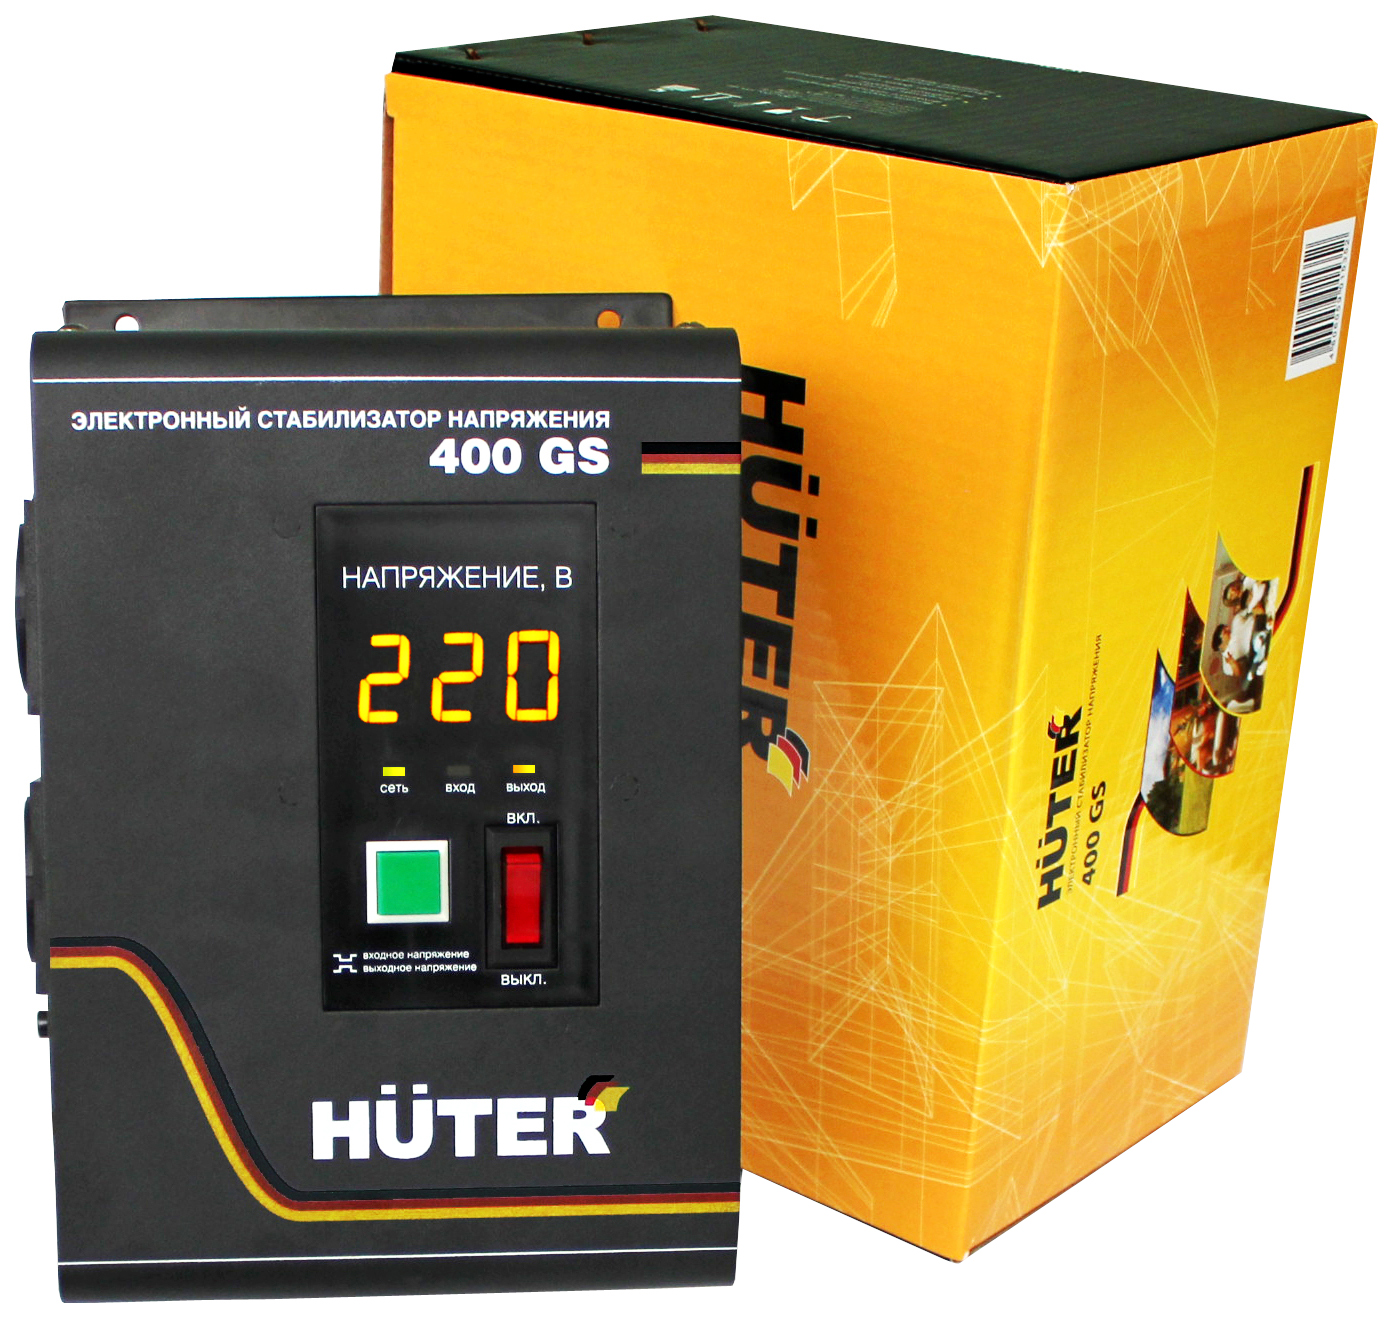 Однофазный стабилизатор Huter 400GS